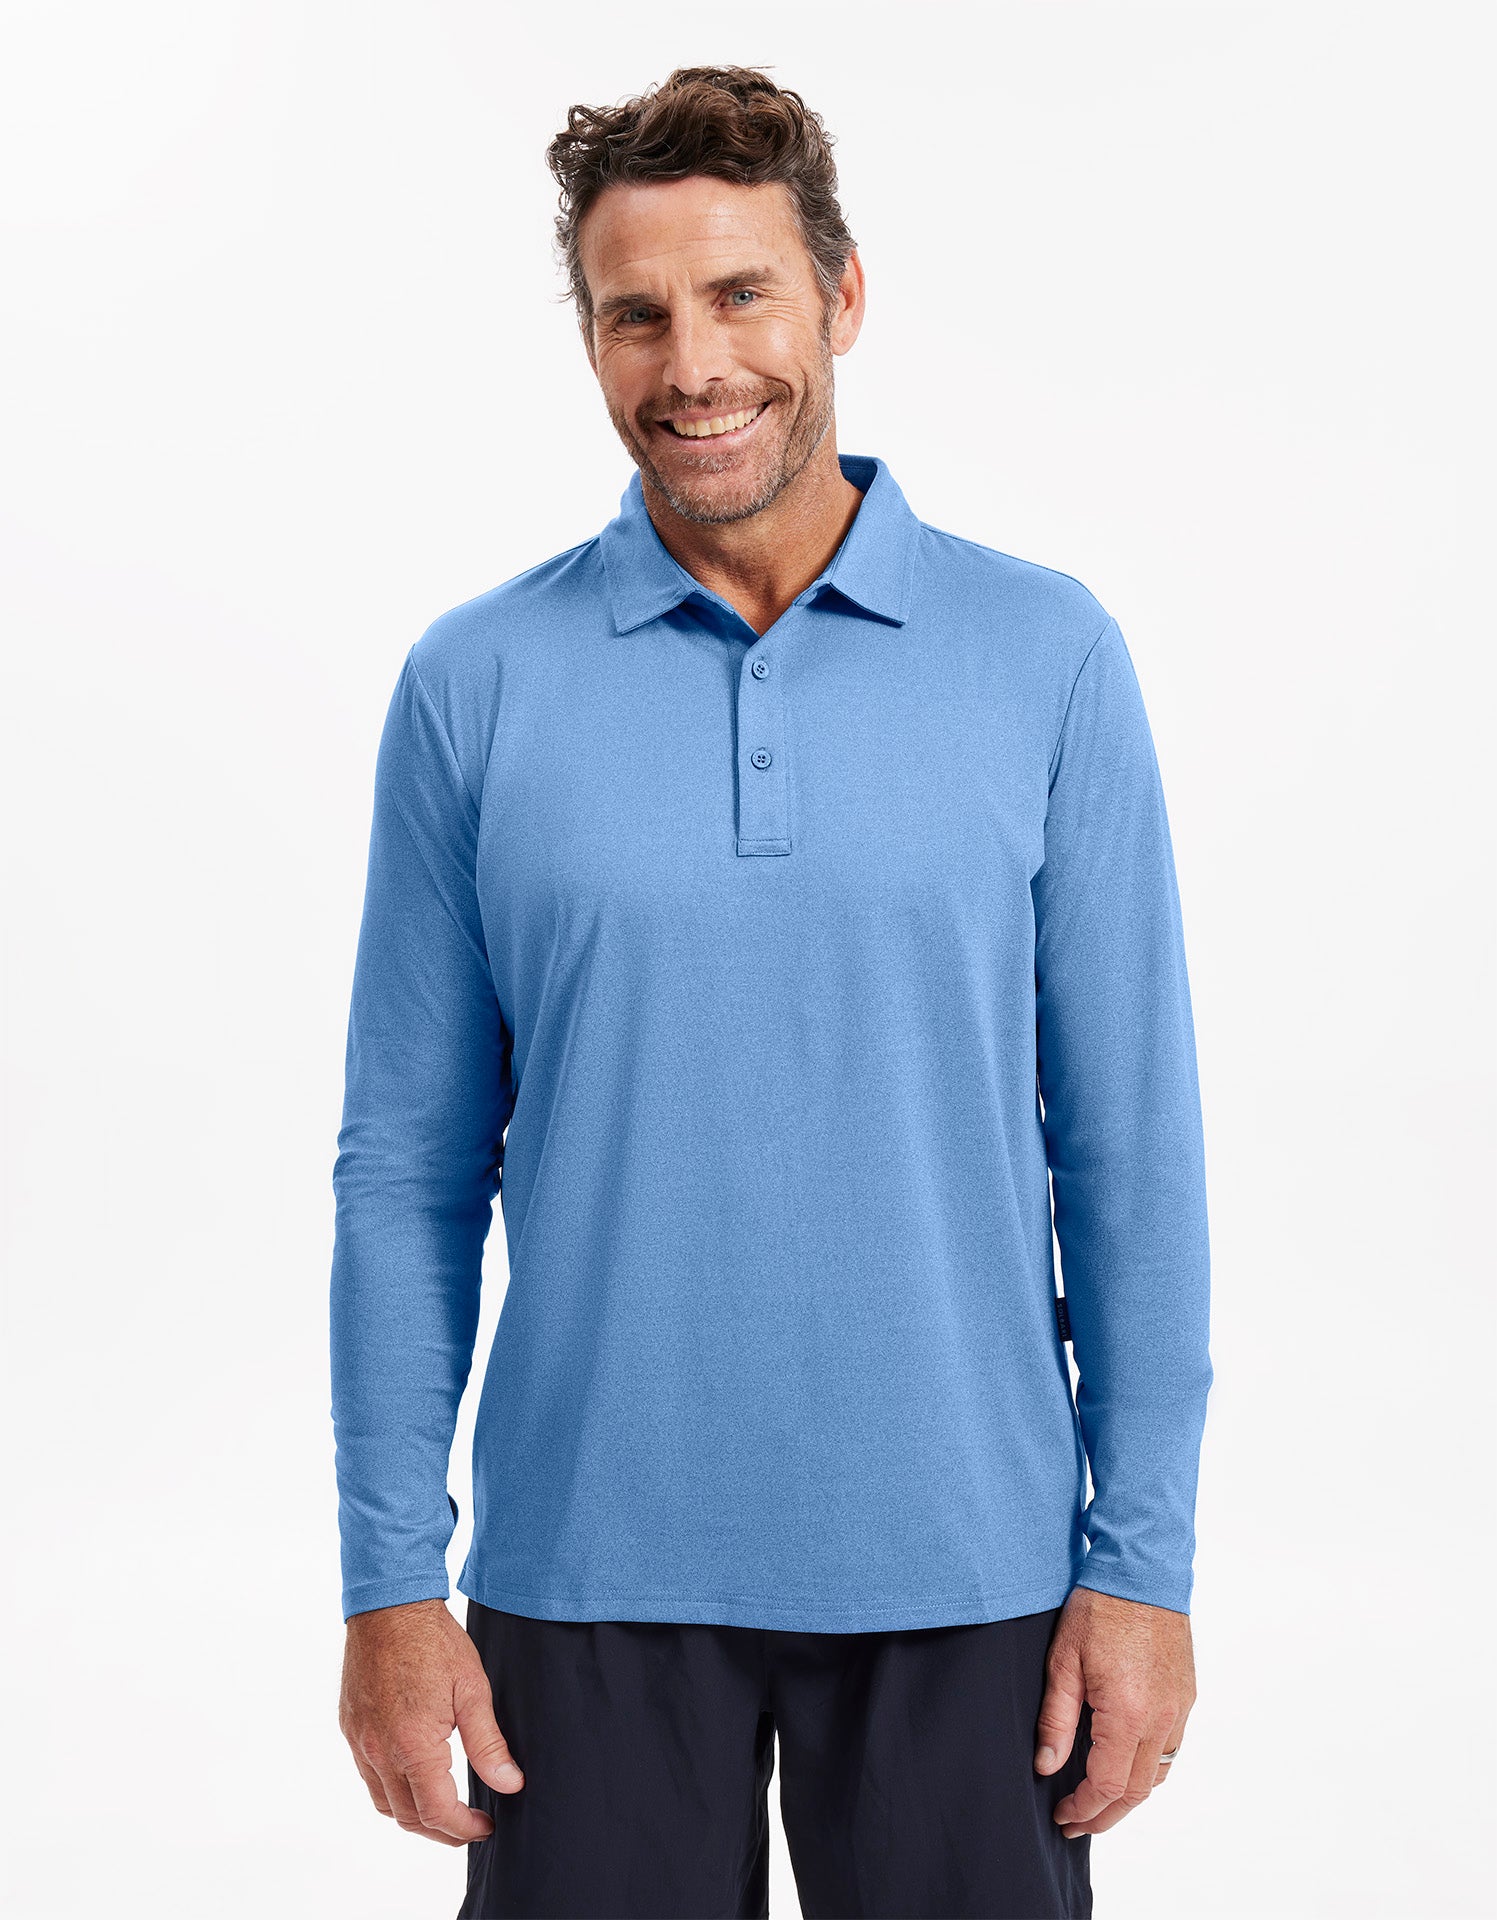 Sun Protective Long Sleeve Polo Shirt For Men UPF 50+